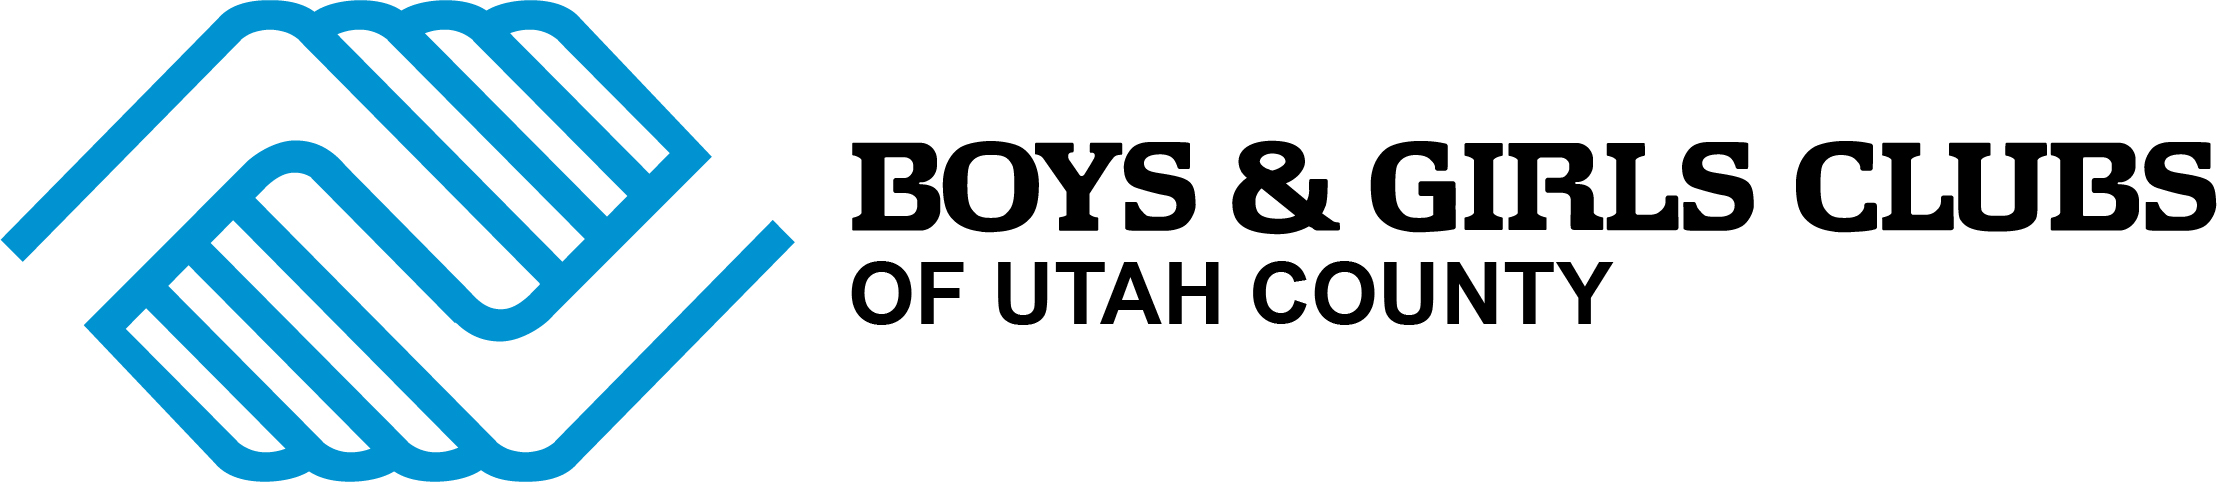 Boys & Girls Clubs of Utah County